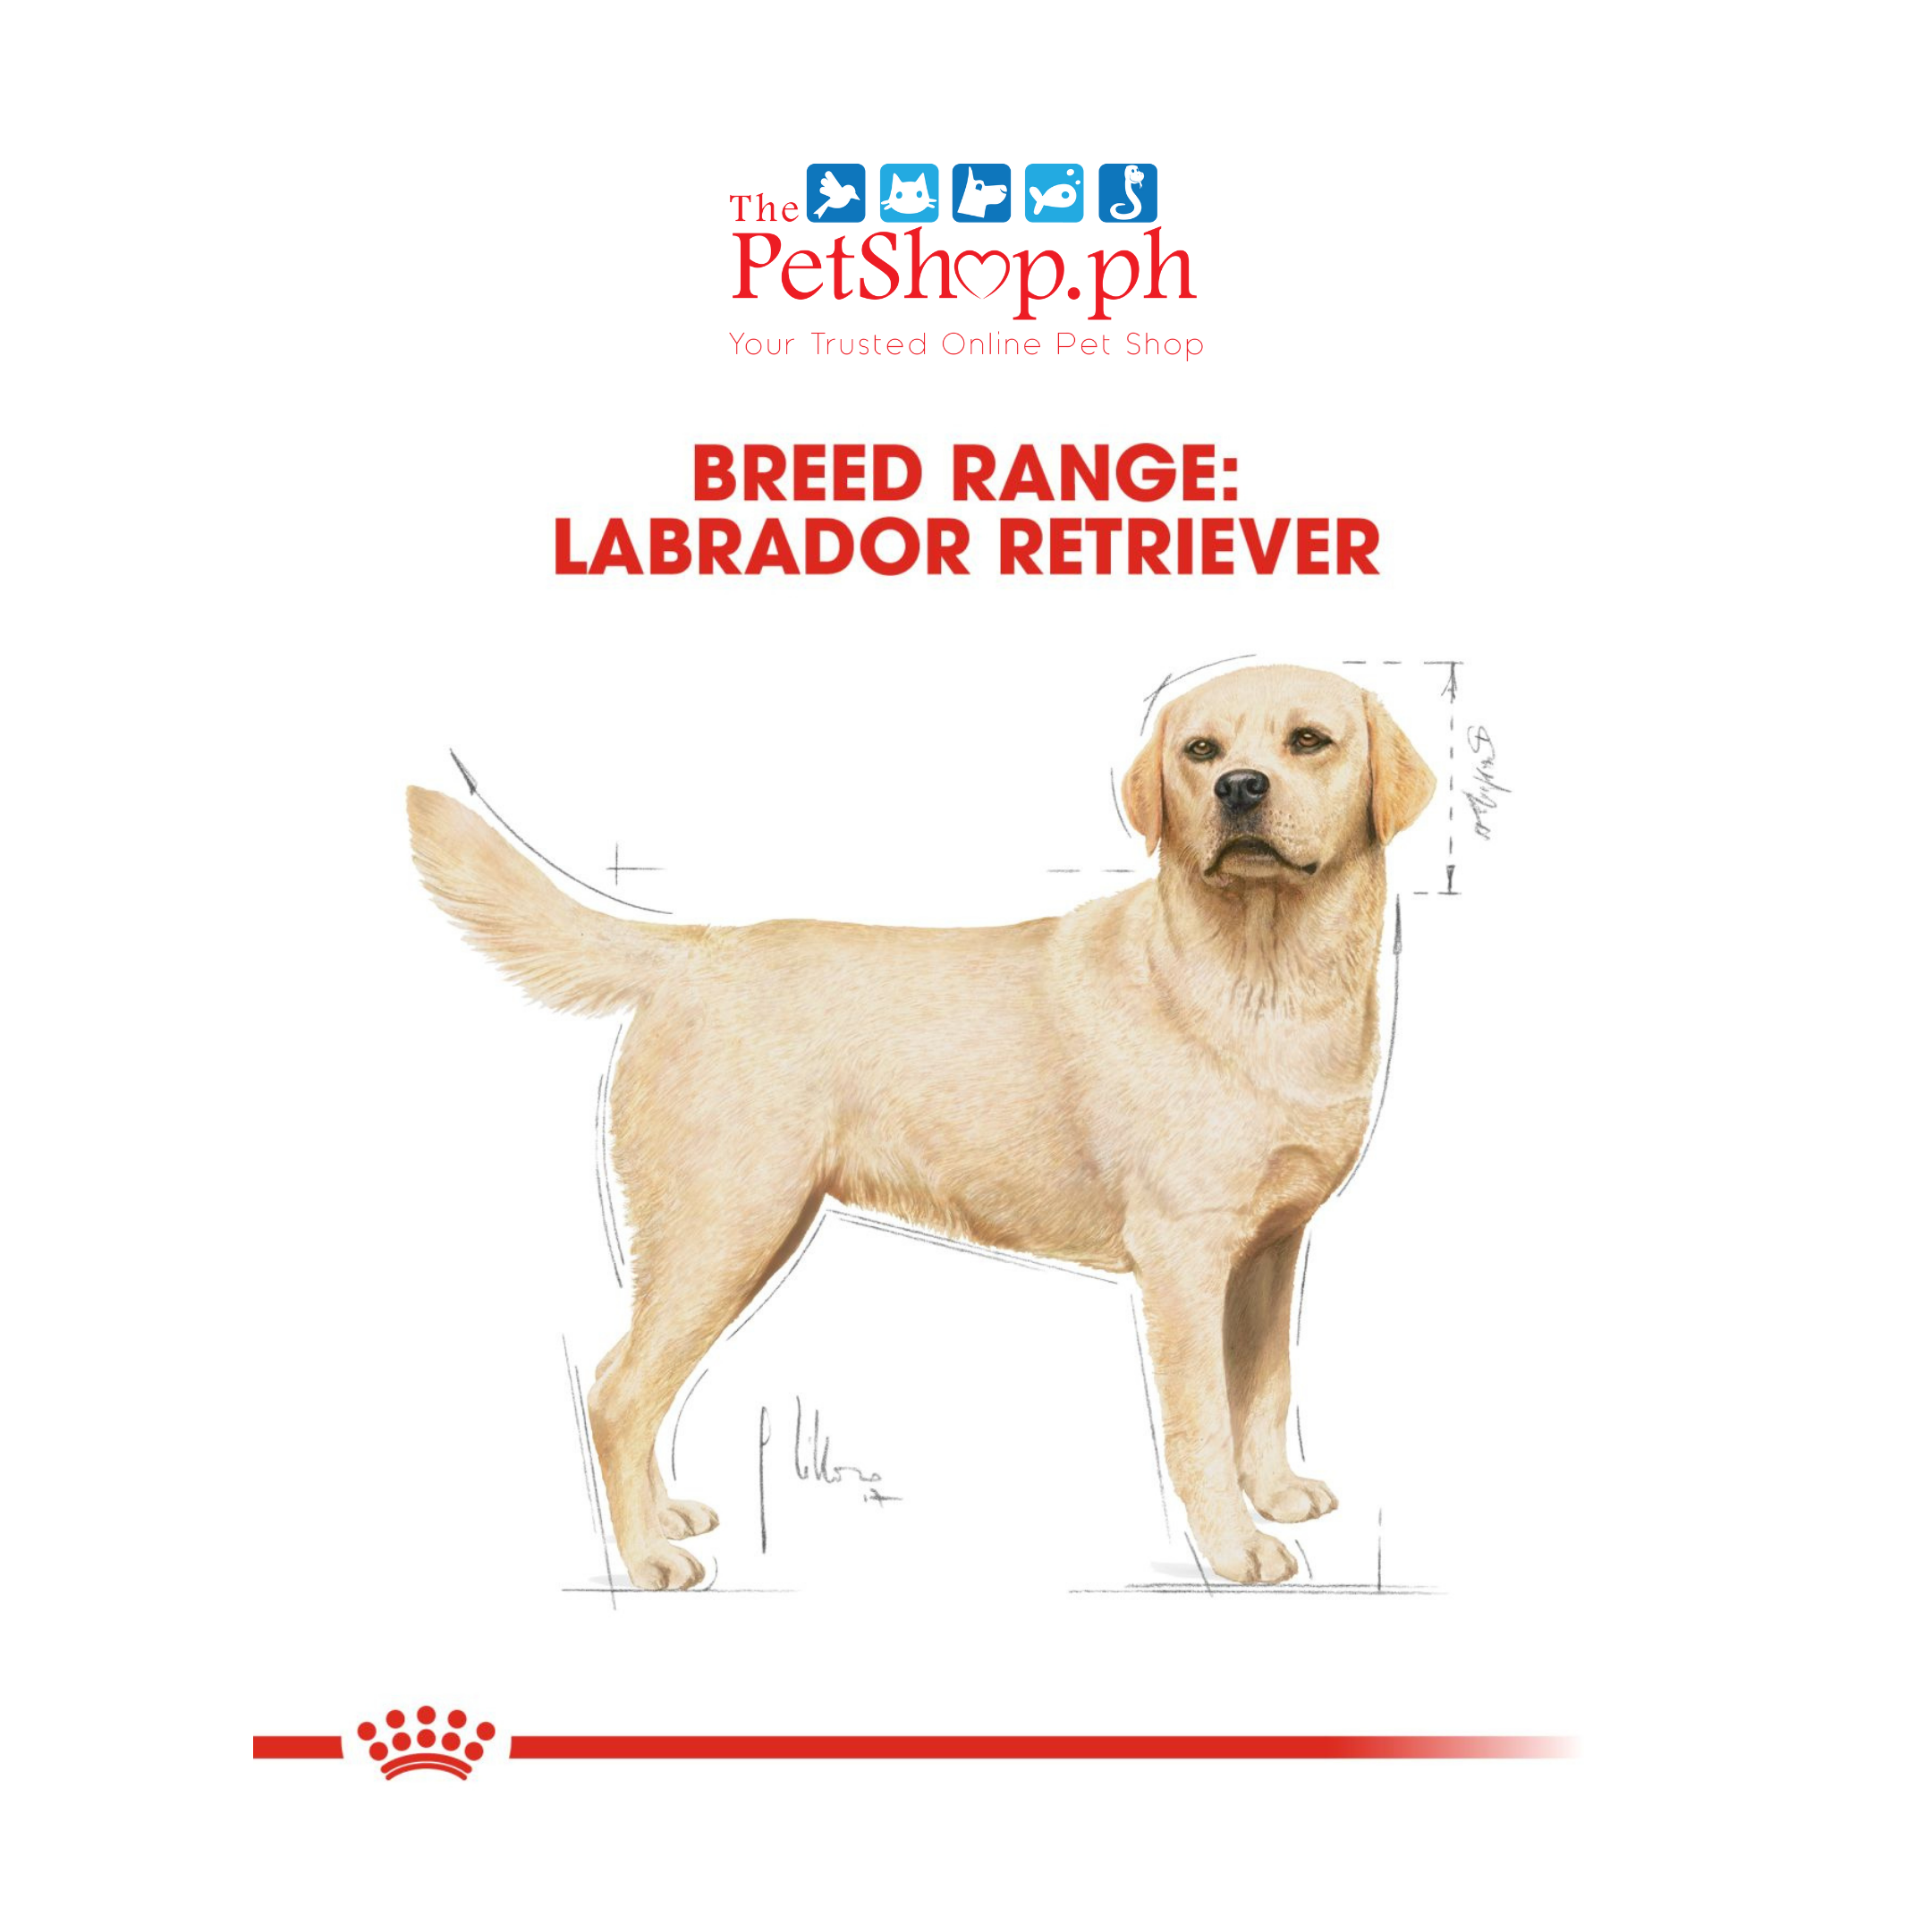 Royal Canin Labrador Retriever 3kg Adult Dry Dog Food-Breed Health Nutrition